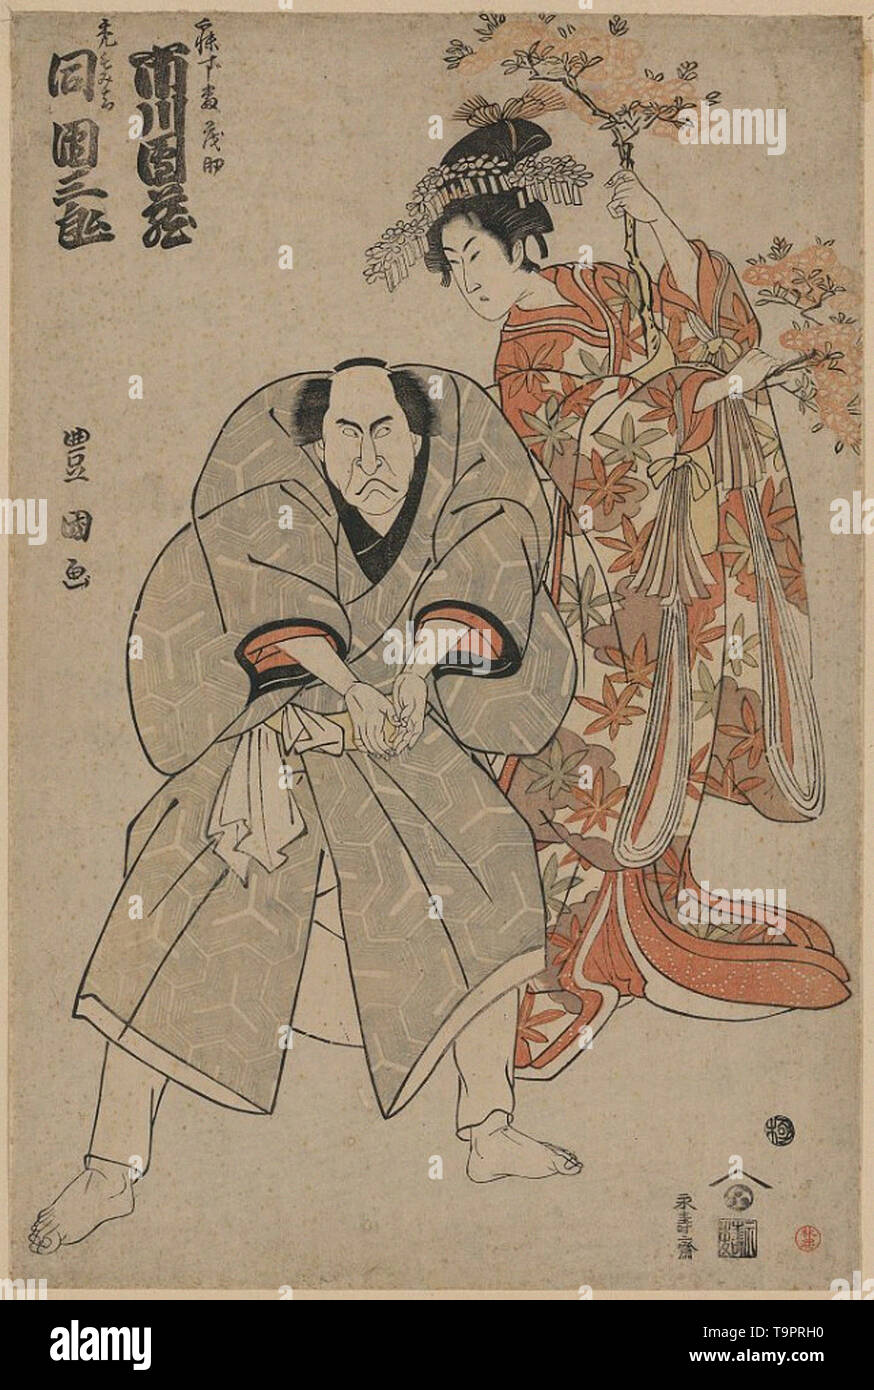 Toyokuni - attori ichikaw danz c5 8d ichikaw danzabur c5 8d c 1799 Foto Stock